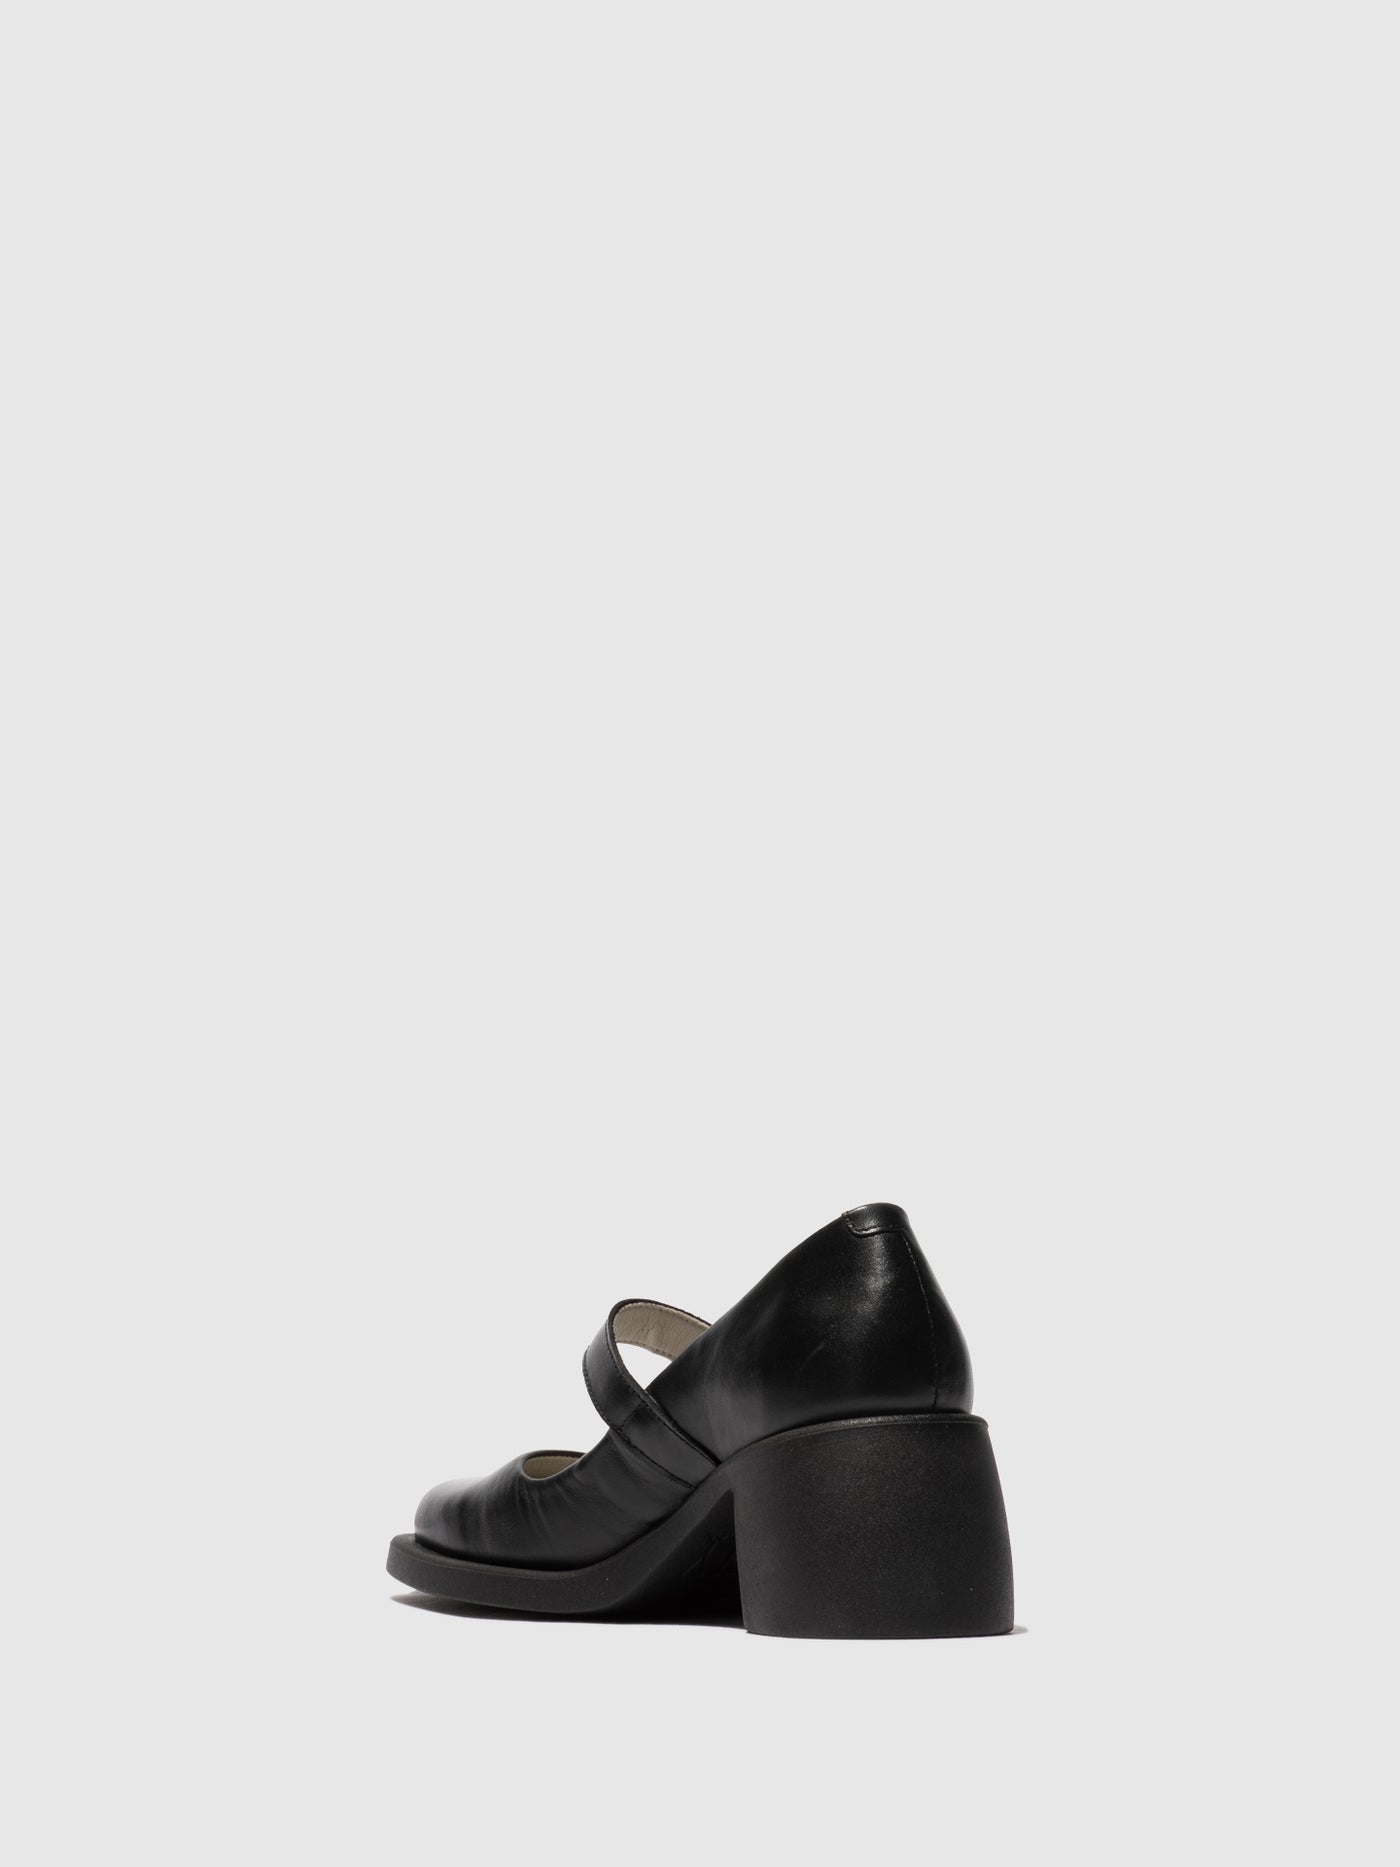 Mary Jane Shoes HUVI044FLY BLACK